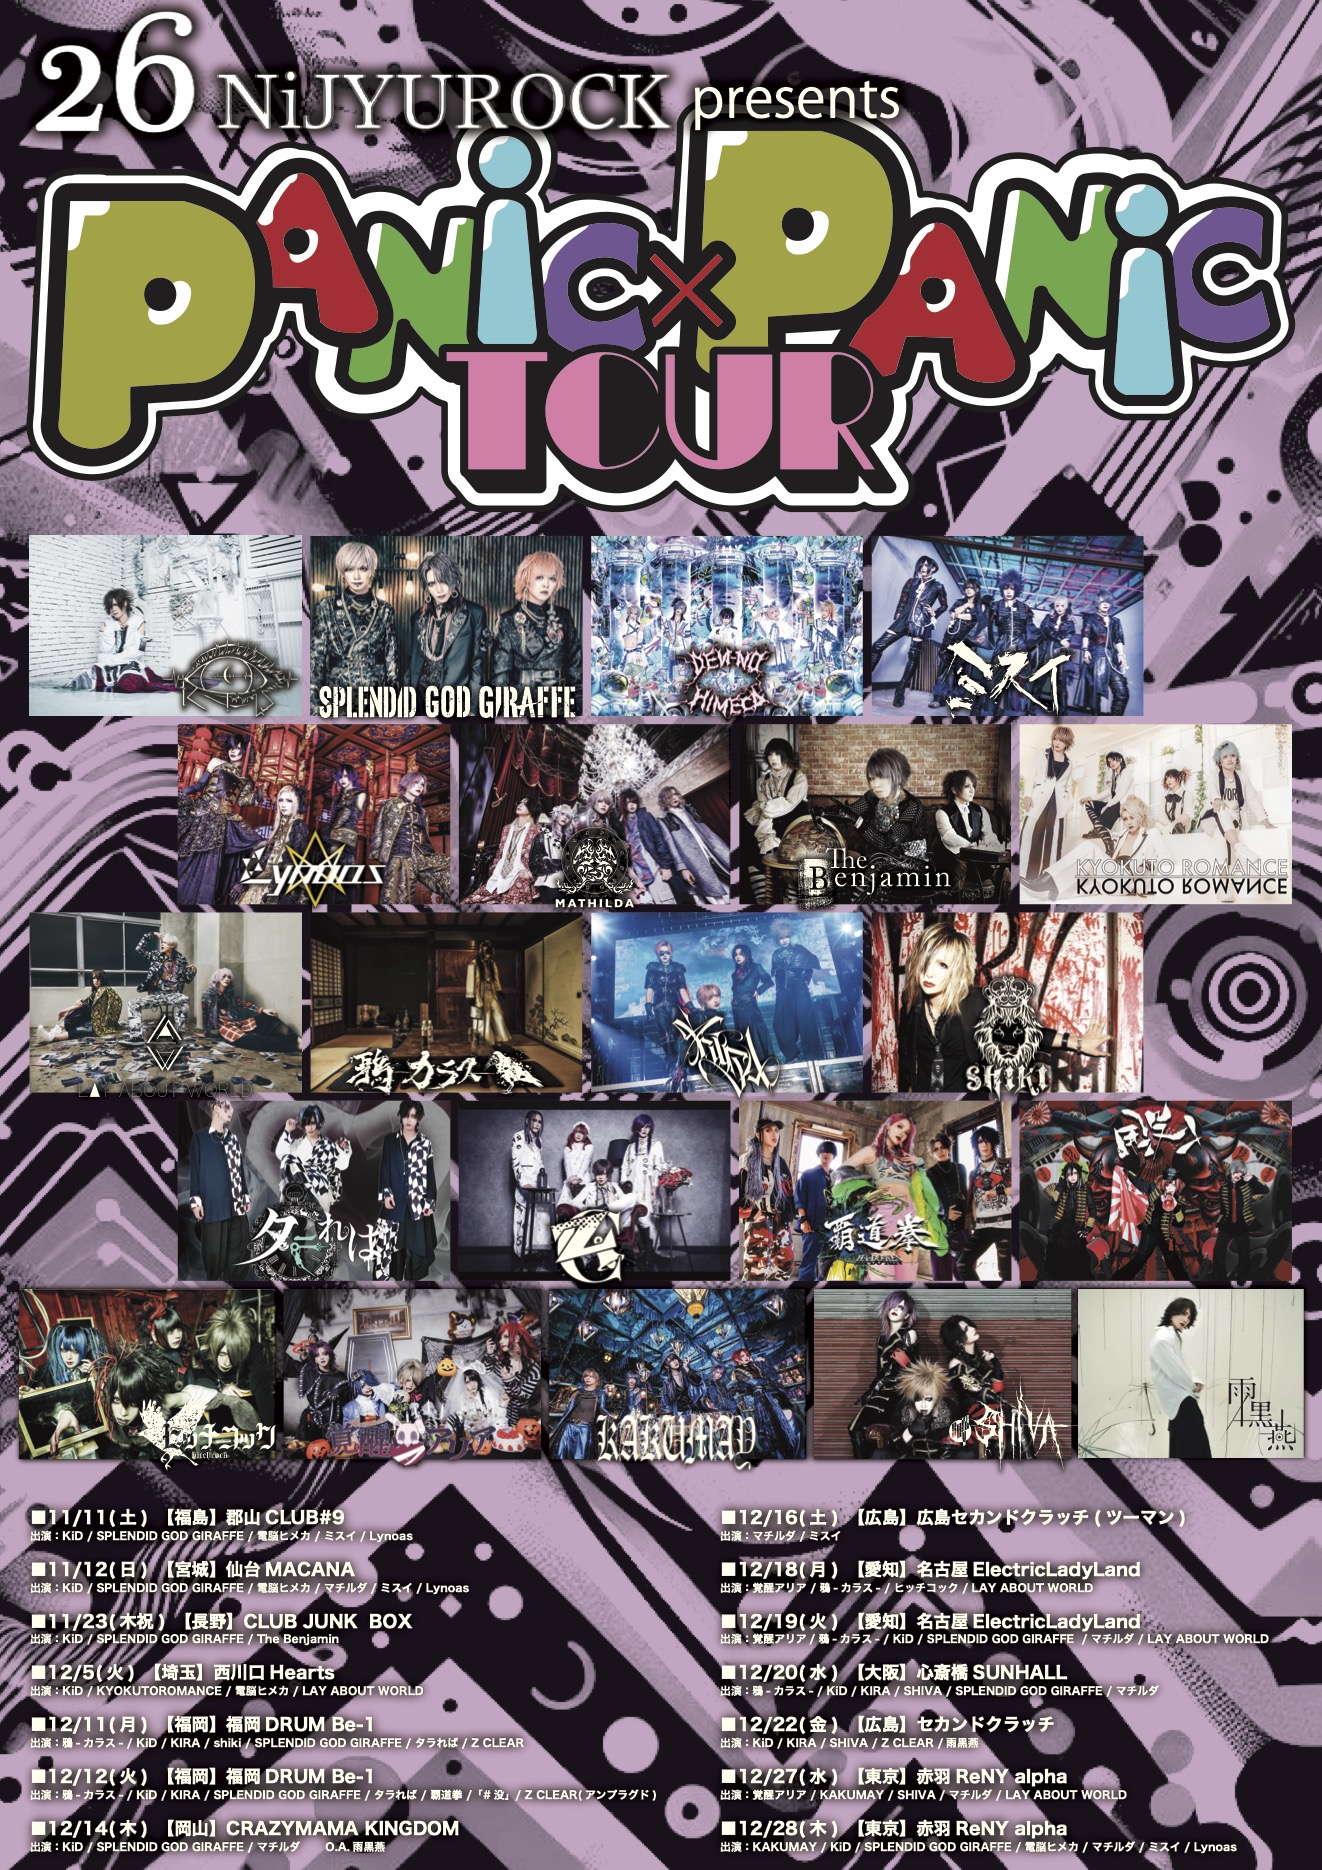 【名古屋12/19】26 NiJYUROCK presents PANiC×PANiC TOUR